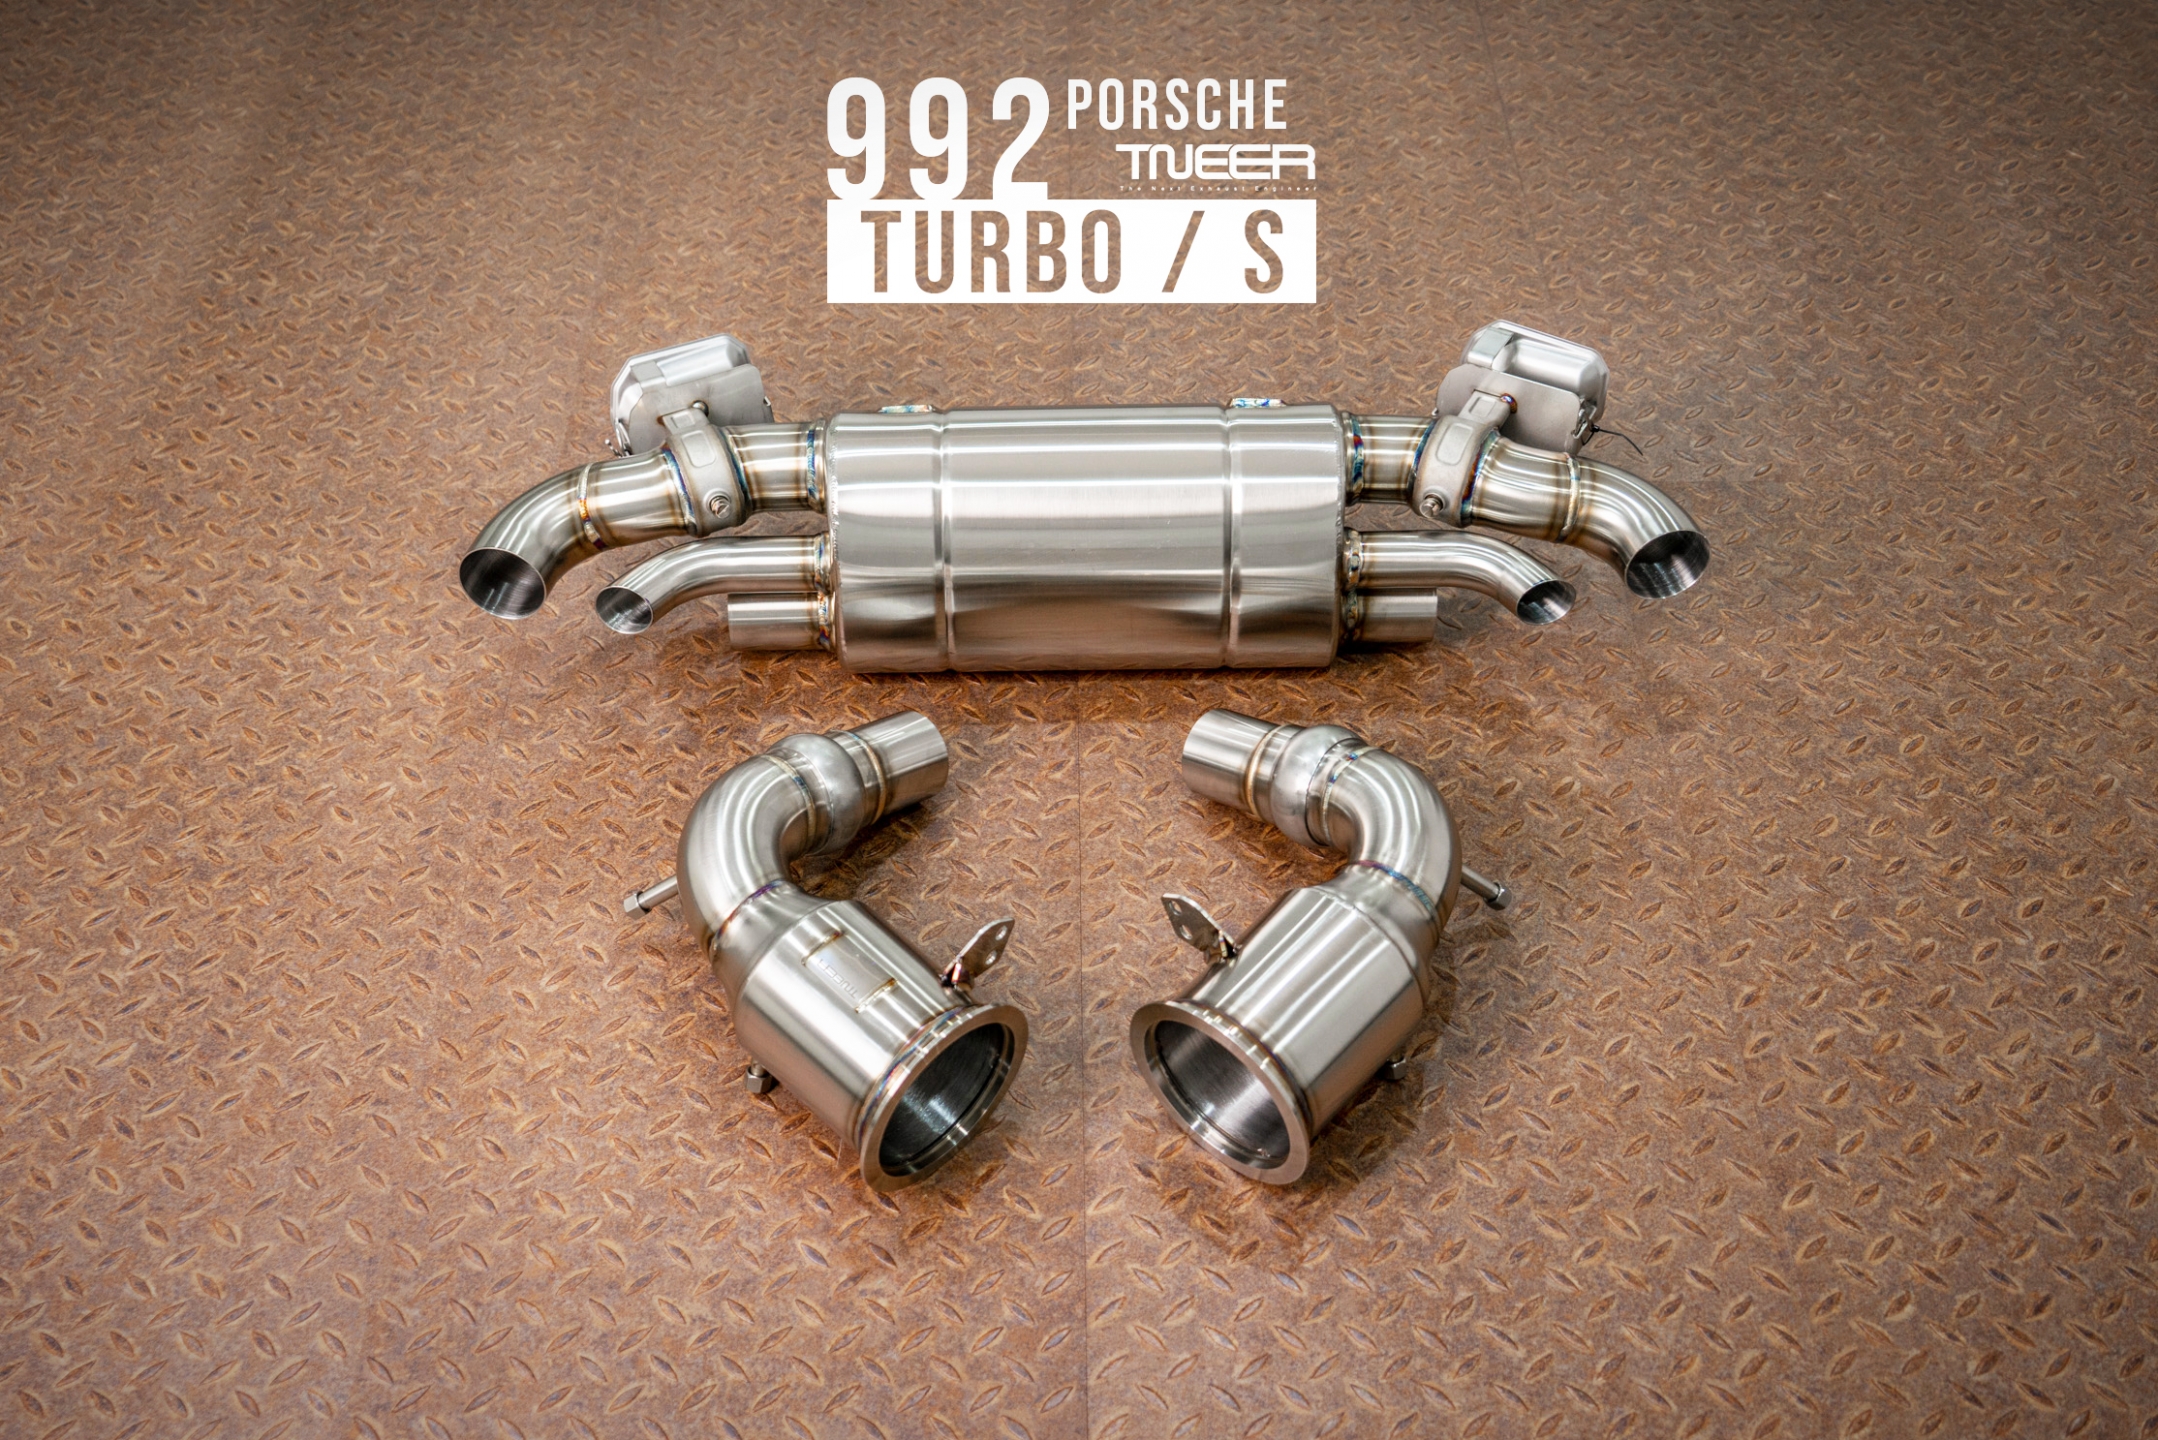 Porsche 992 Turbo / S PSE Version TNEER Performance Downpipes